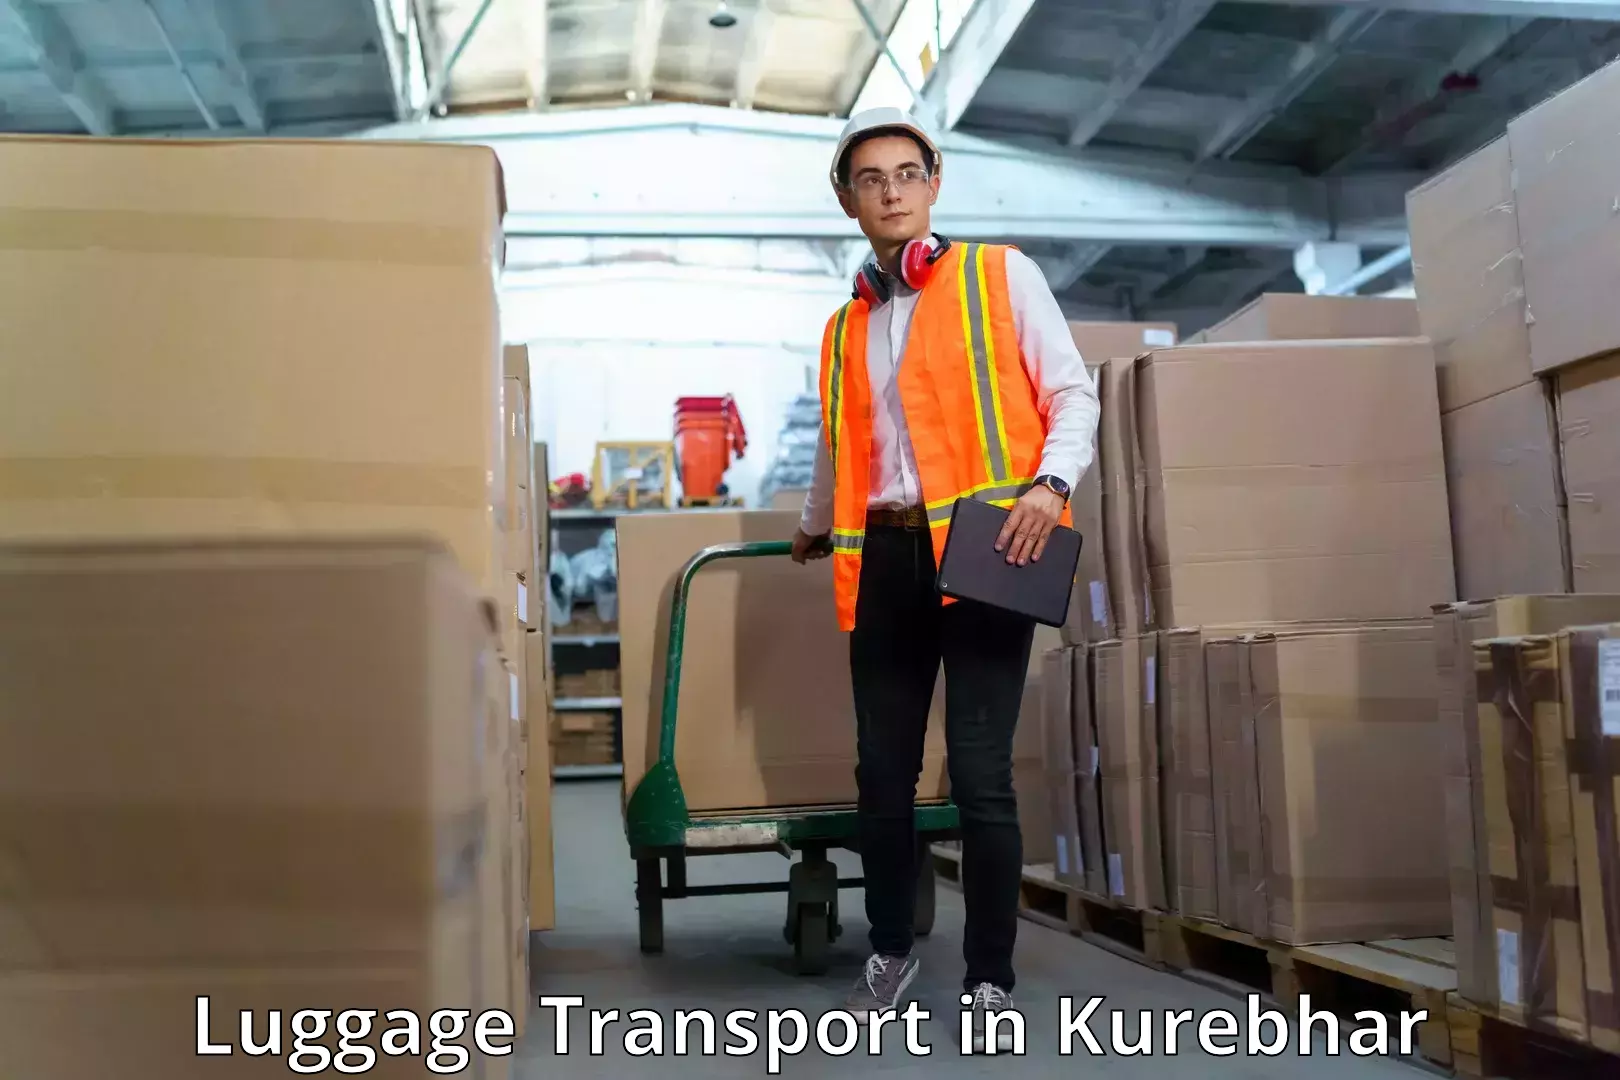 Luggage transport consulting in Kurebhar